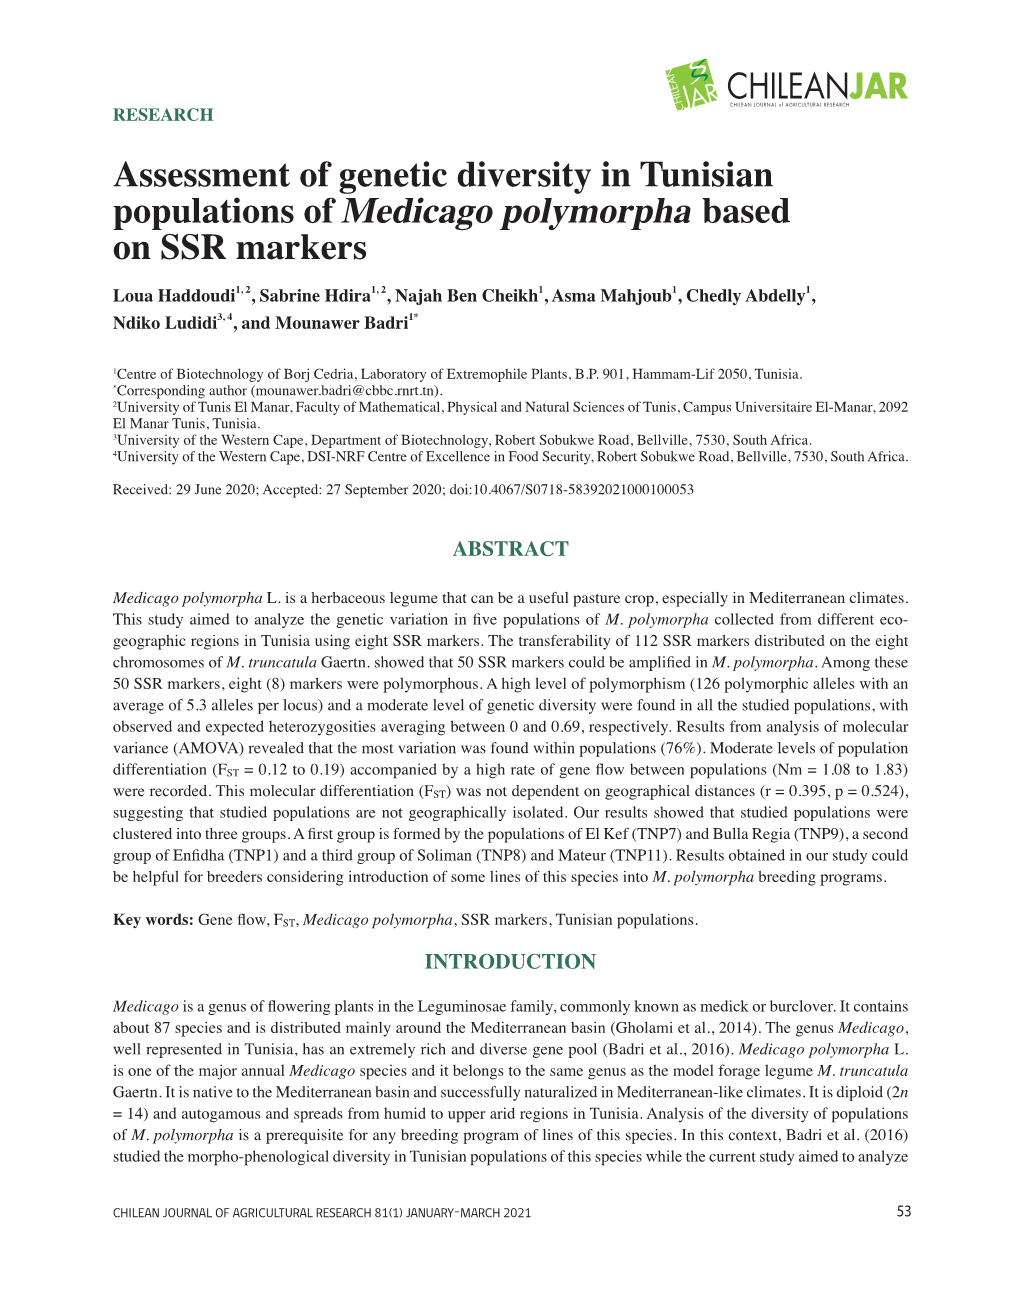 Assessment of Genetic Diversity in Tunisian Populations of Medicago